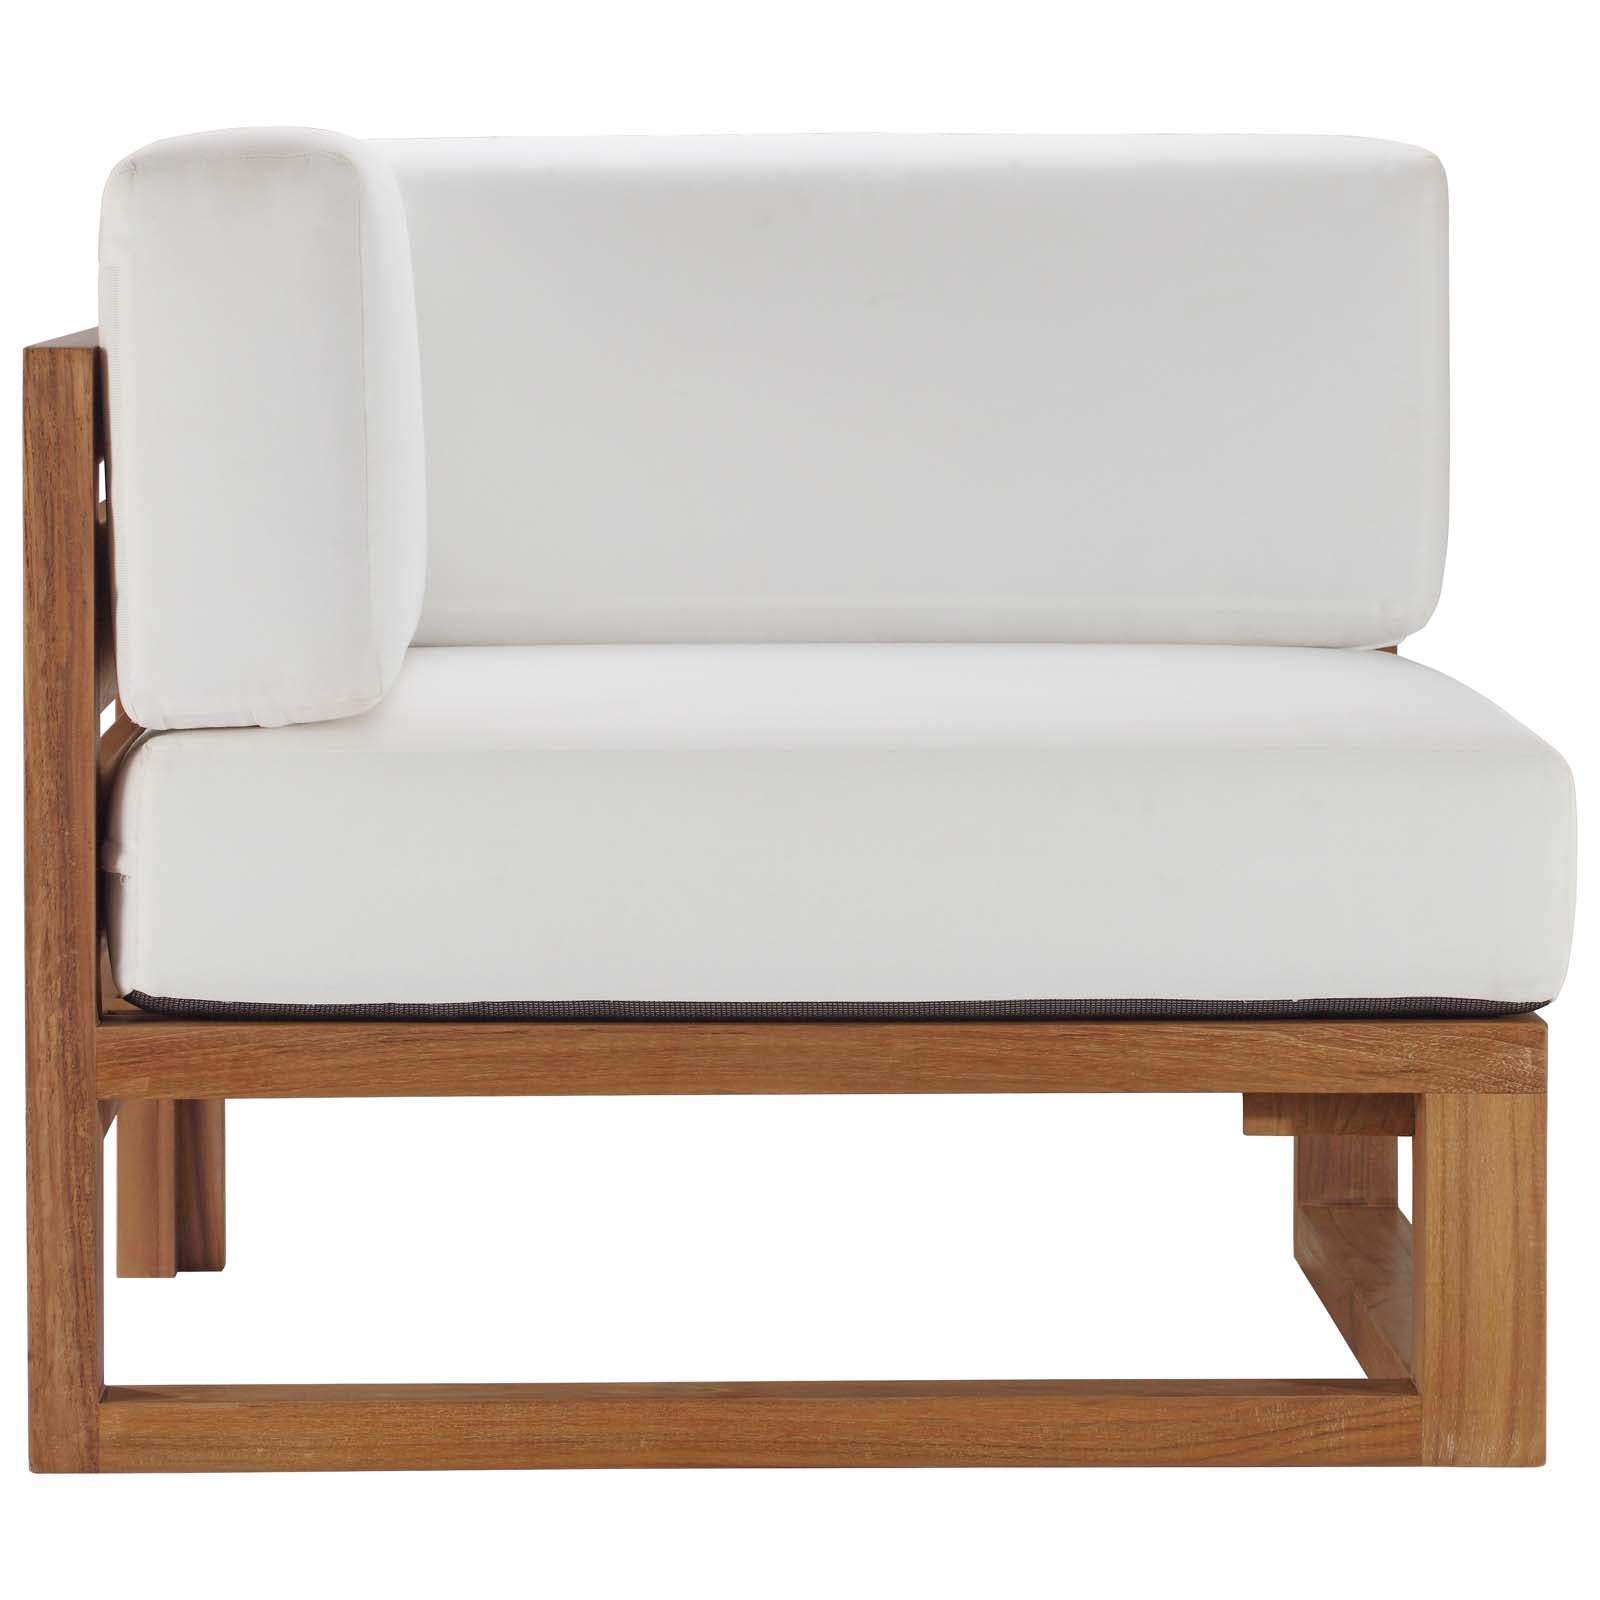 Upland Outdoor Patio Teak Wood Corner Chair-Outdoor Corner Chair-Modway-Wall2Wall Furnishings